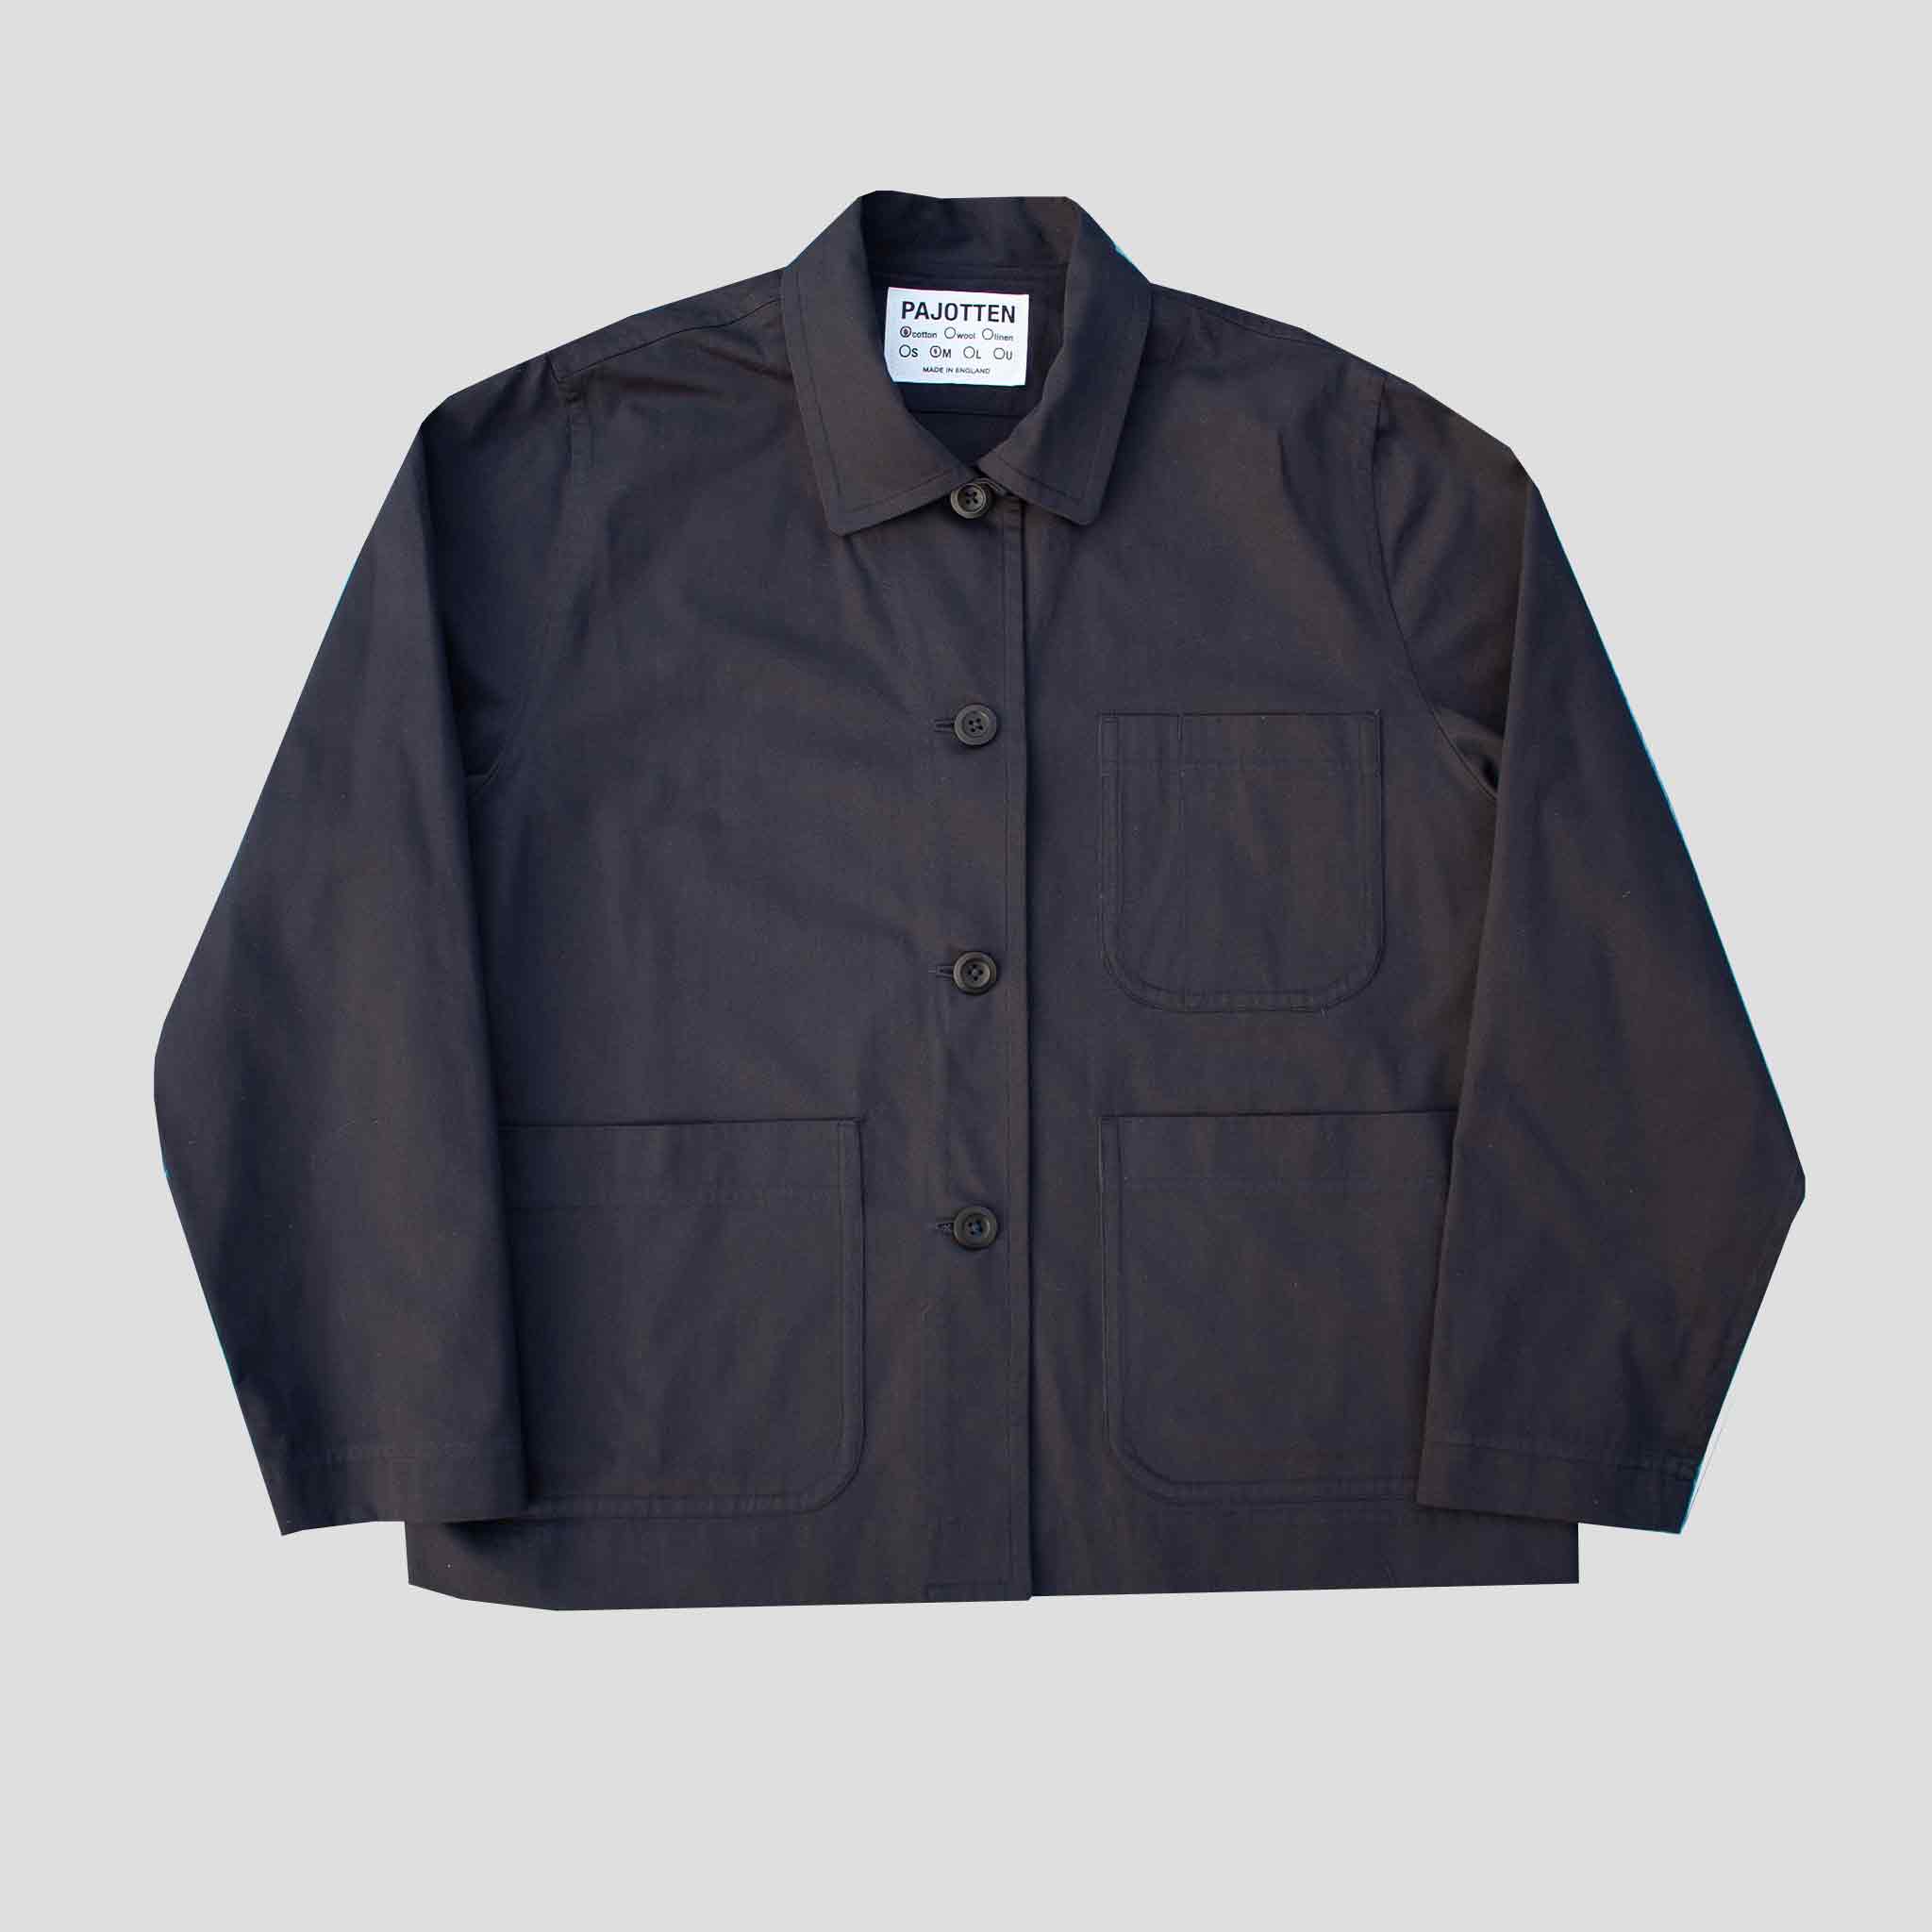 Simple chore jacket soft navy twill